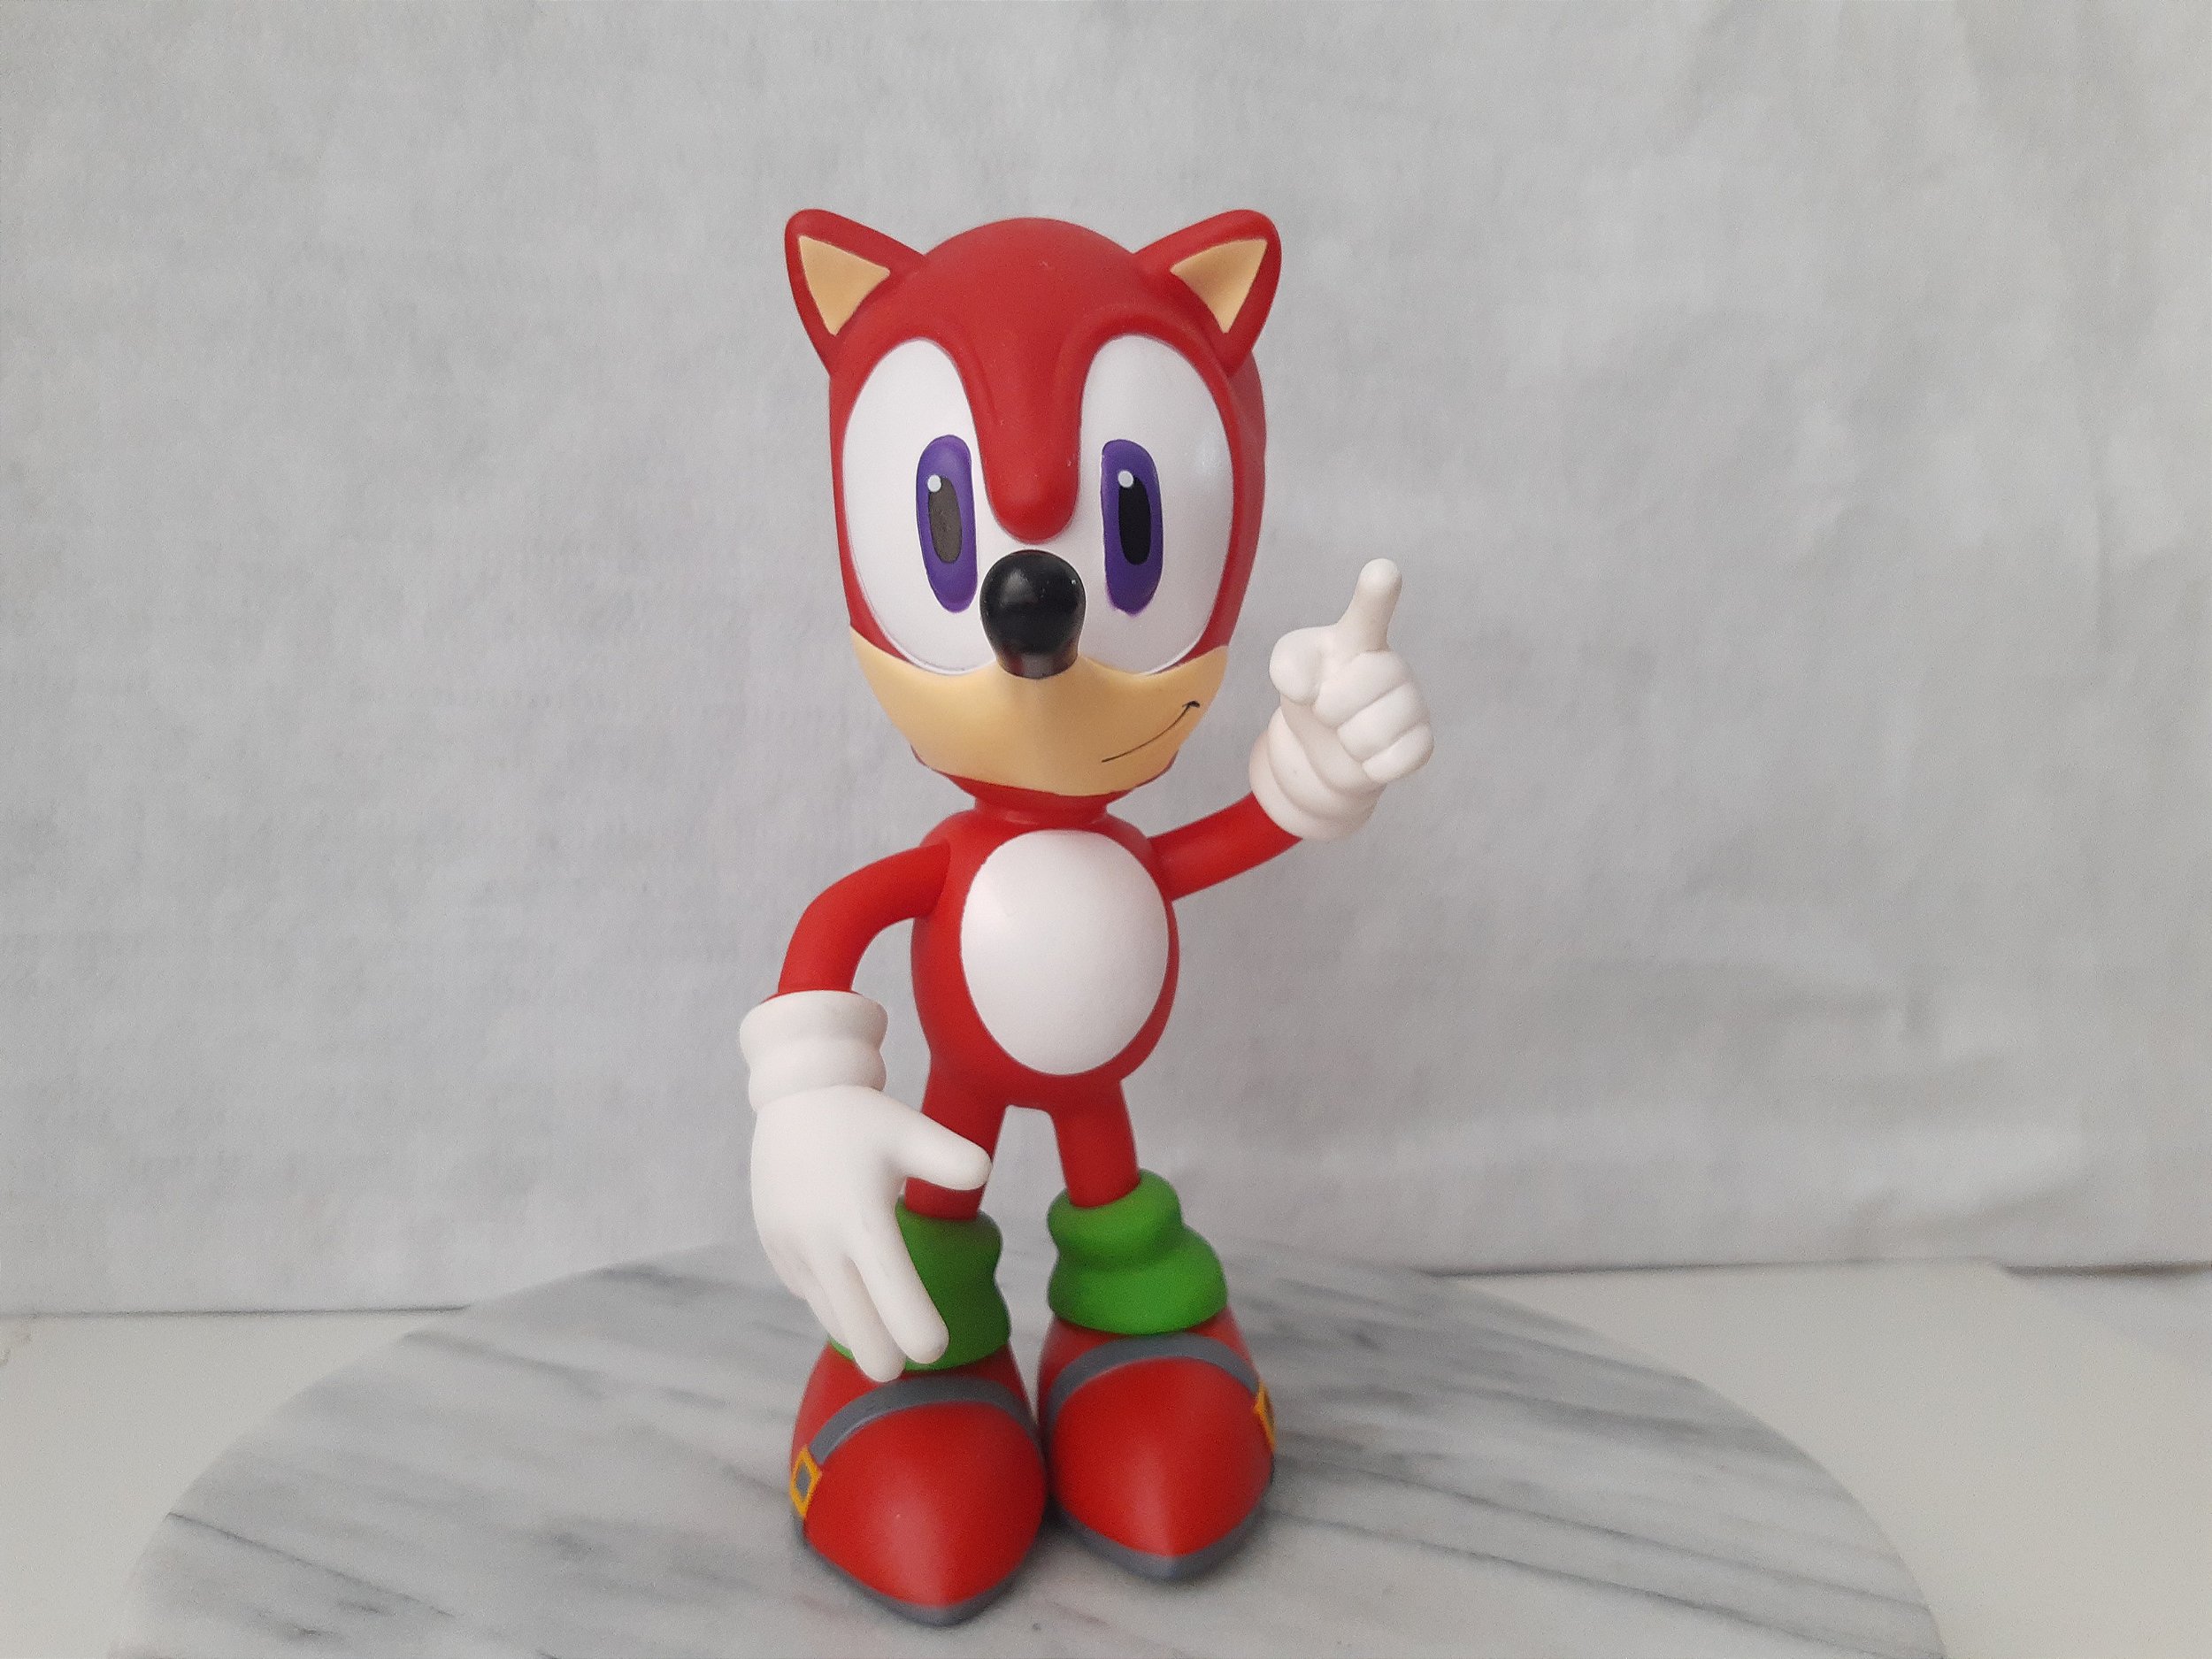 Boneco Sonic Articulado Grande Original Brinquedo